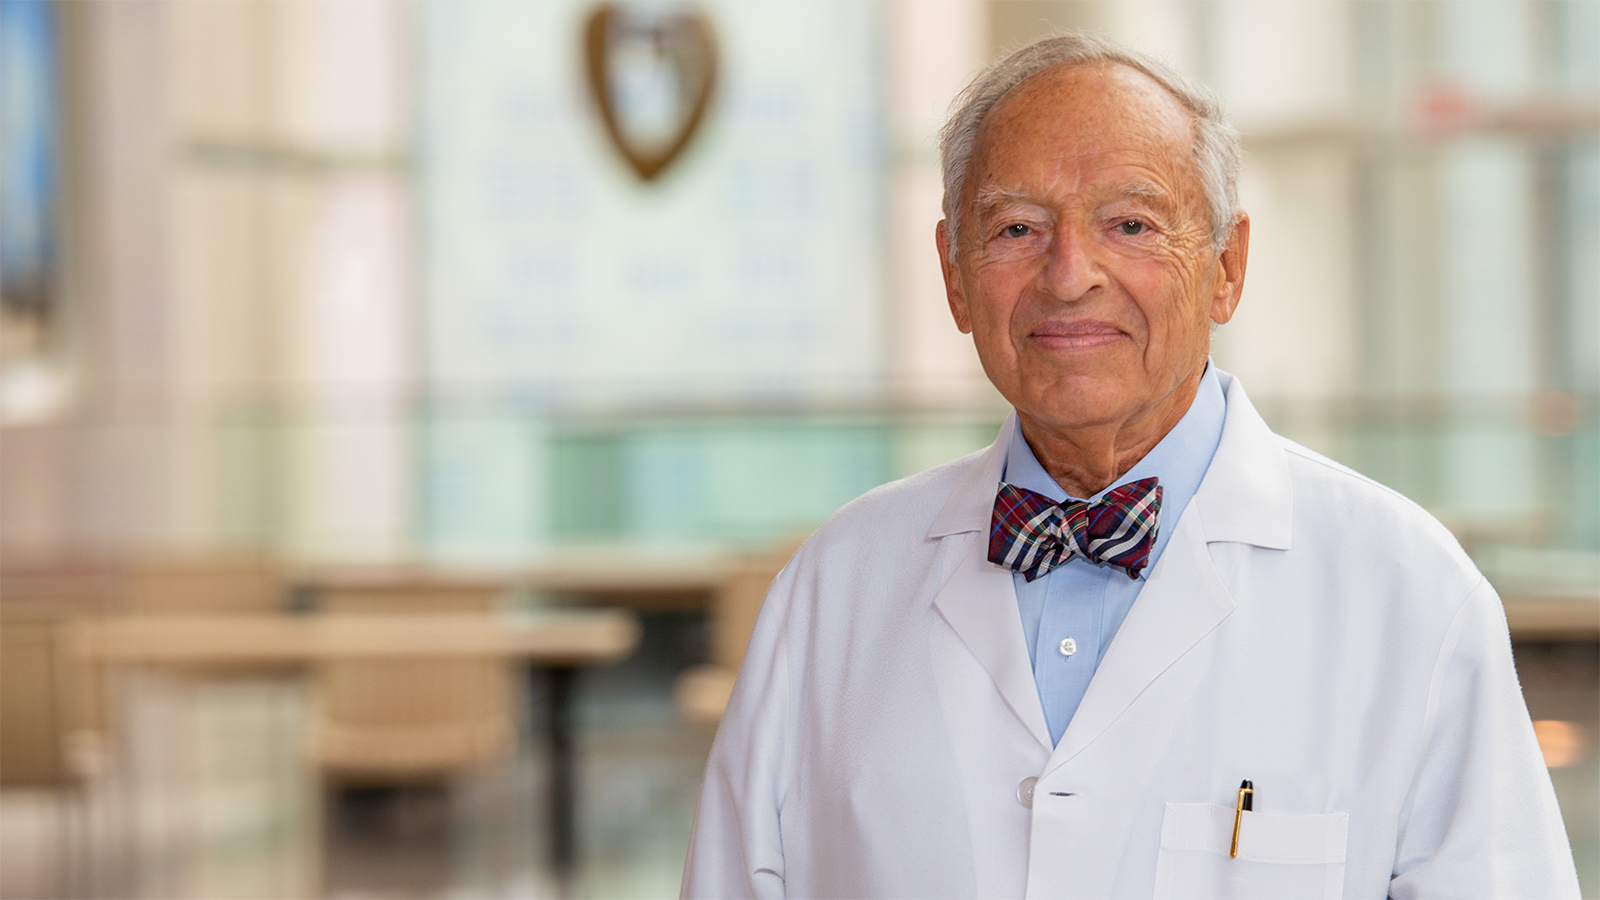 Roberto Lufschanowski, MD Announces Retirement after 60 Years of Service in Medicine